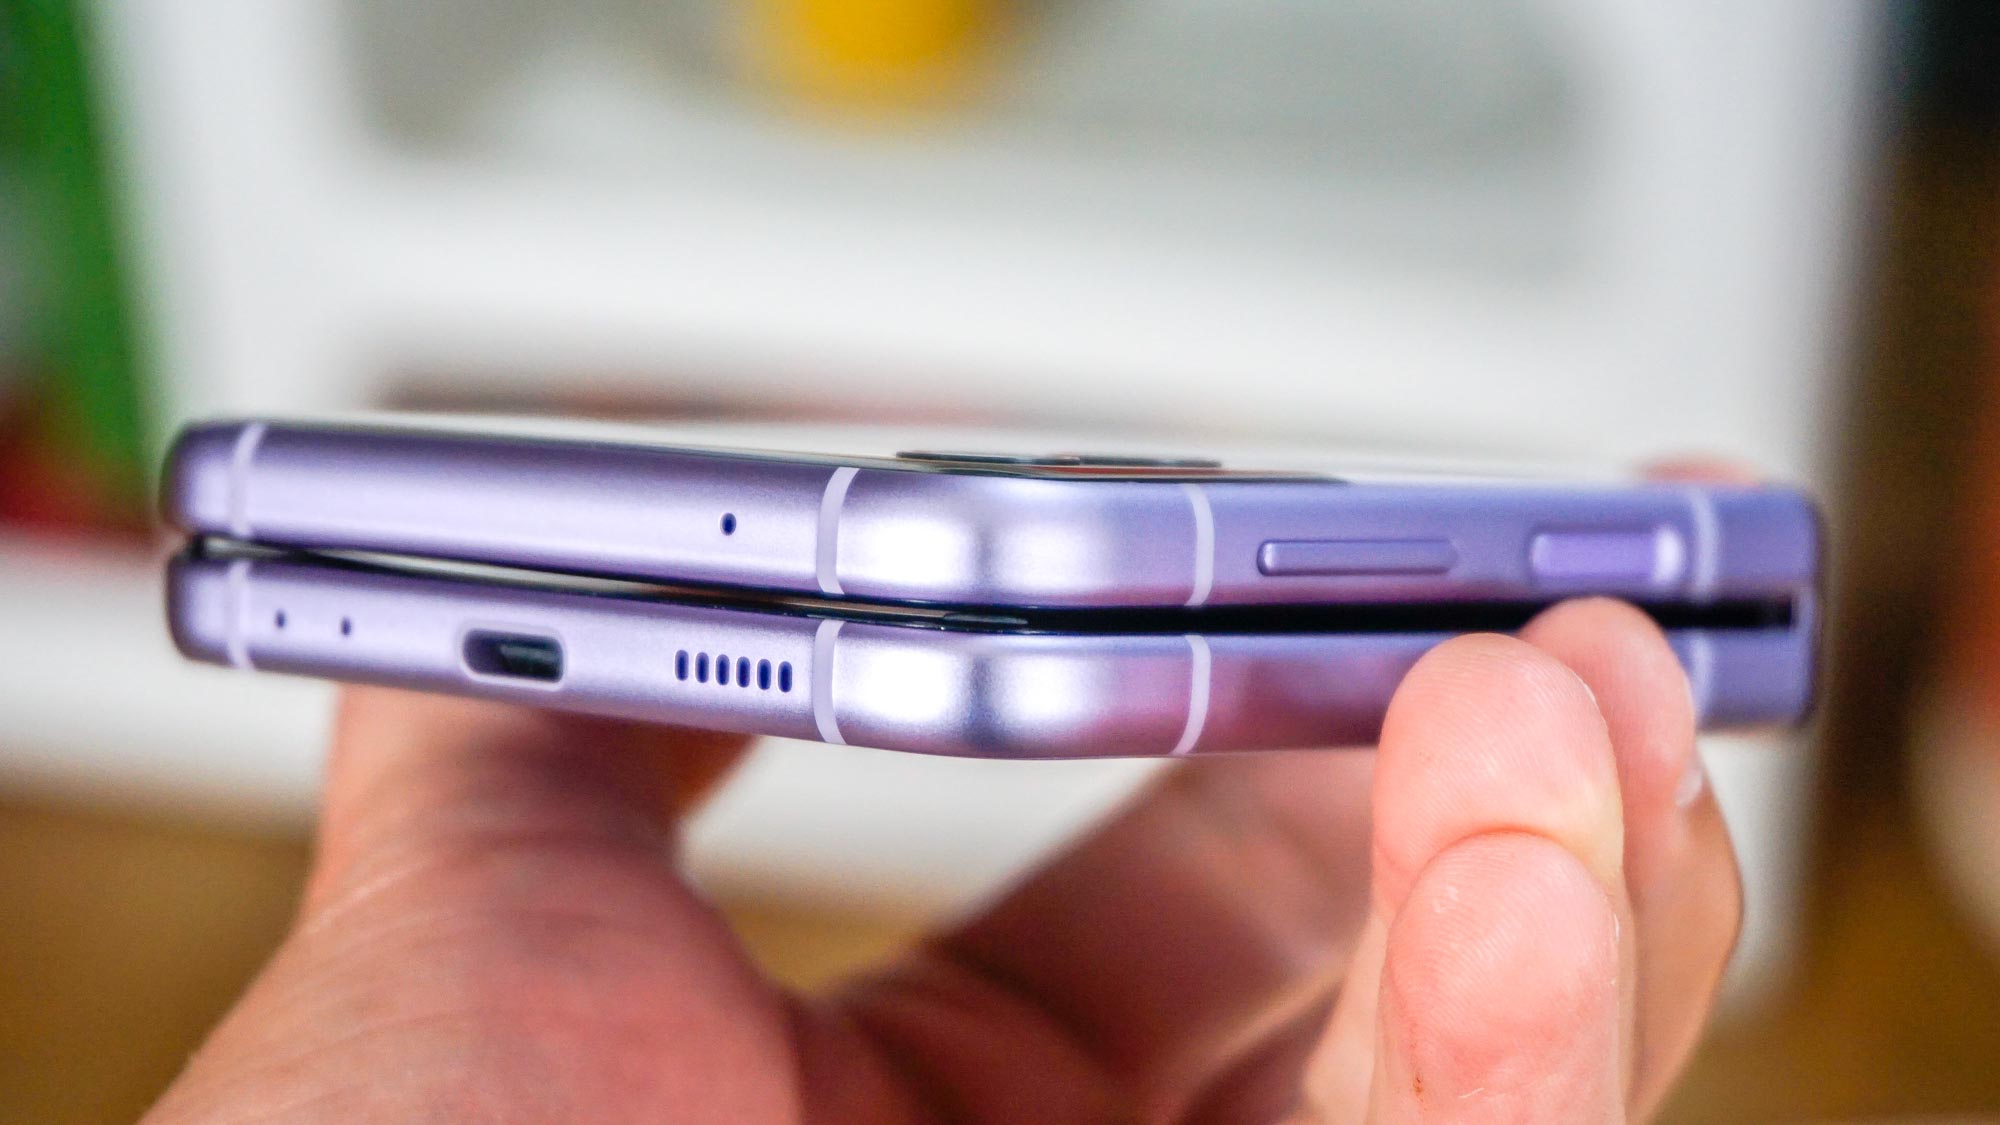 Samsung Galaxy Z Flip 3 hands-on review